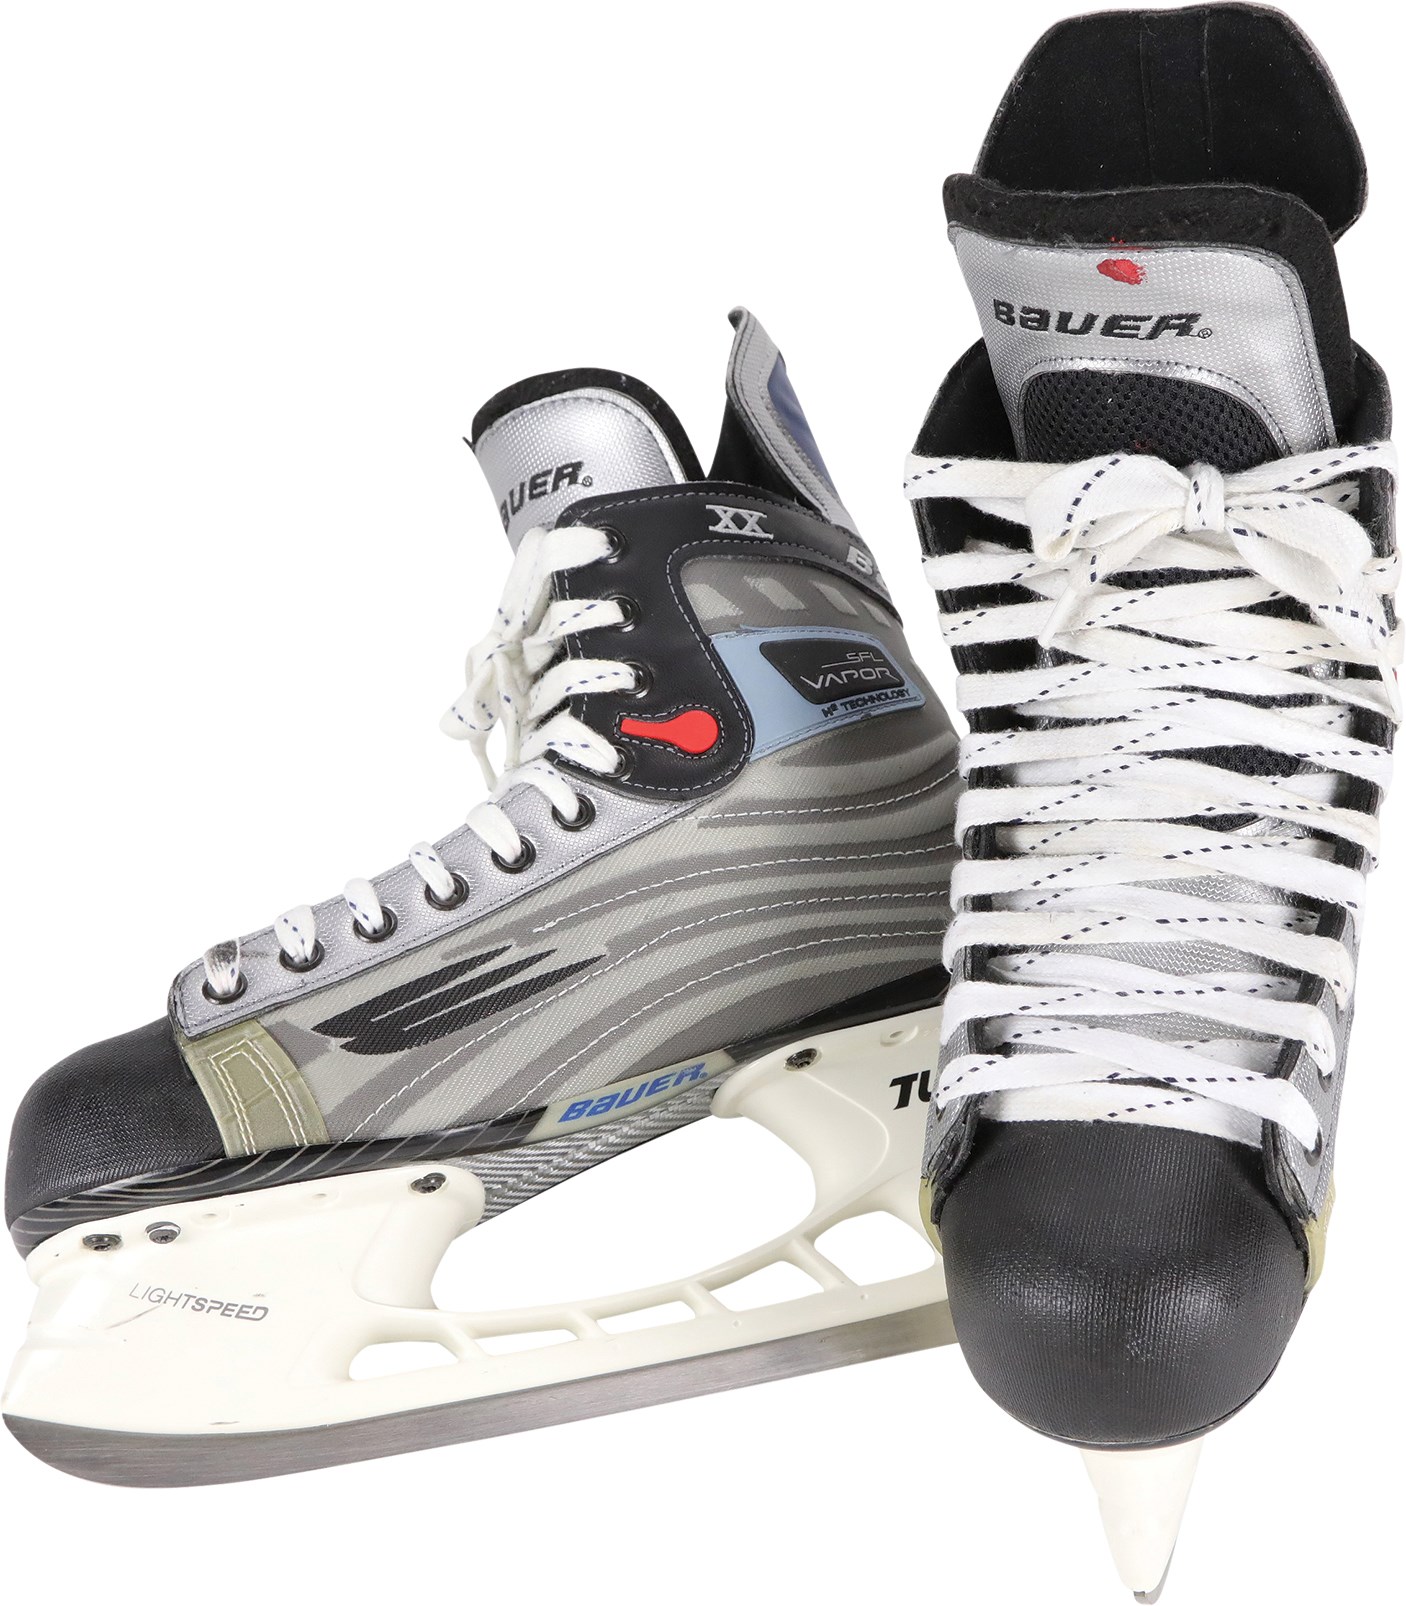 Hockey - 2004 Mark Messier New York Rangers Game Used Skates (Photo-Matched)